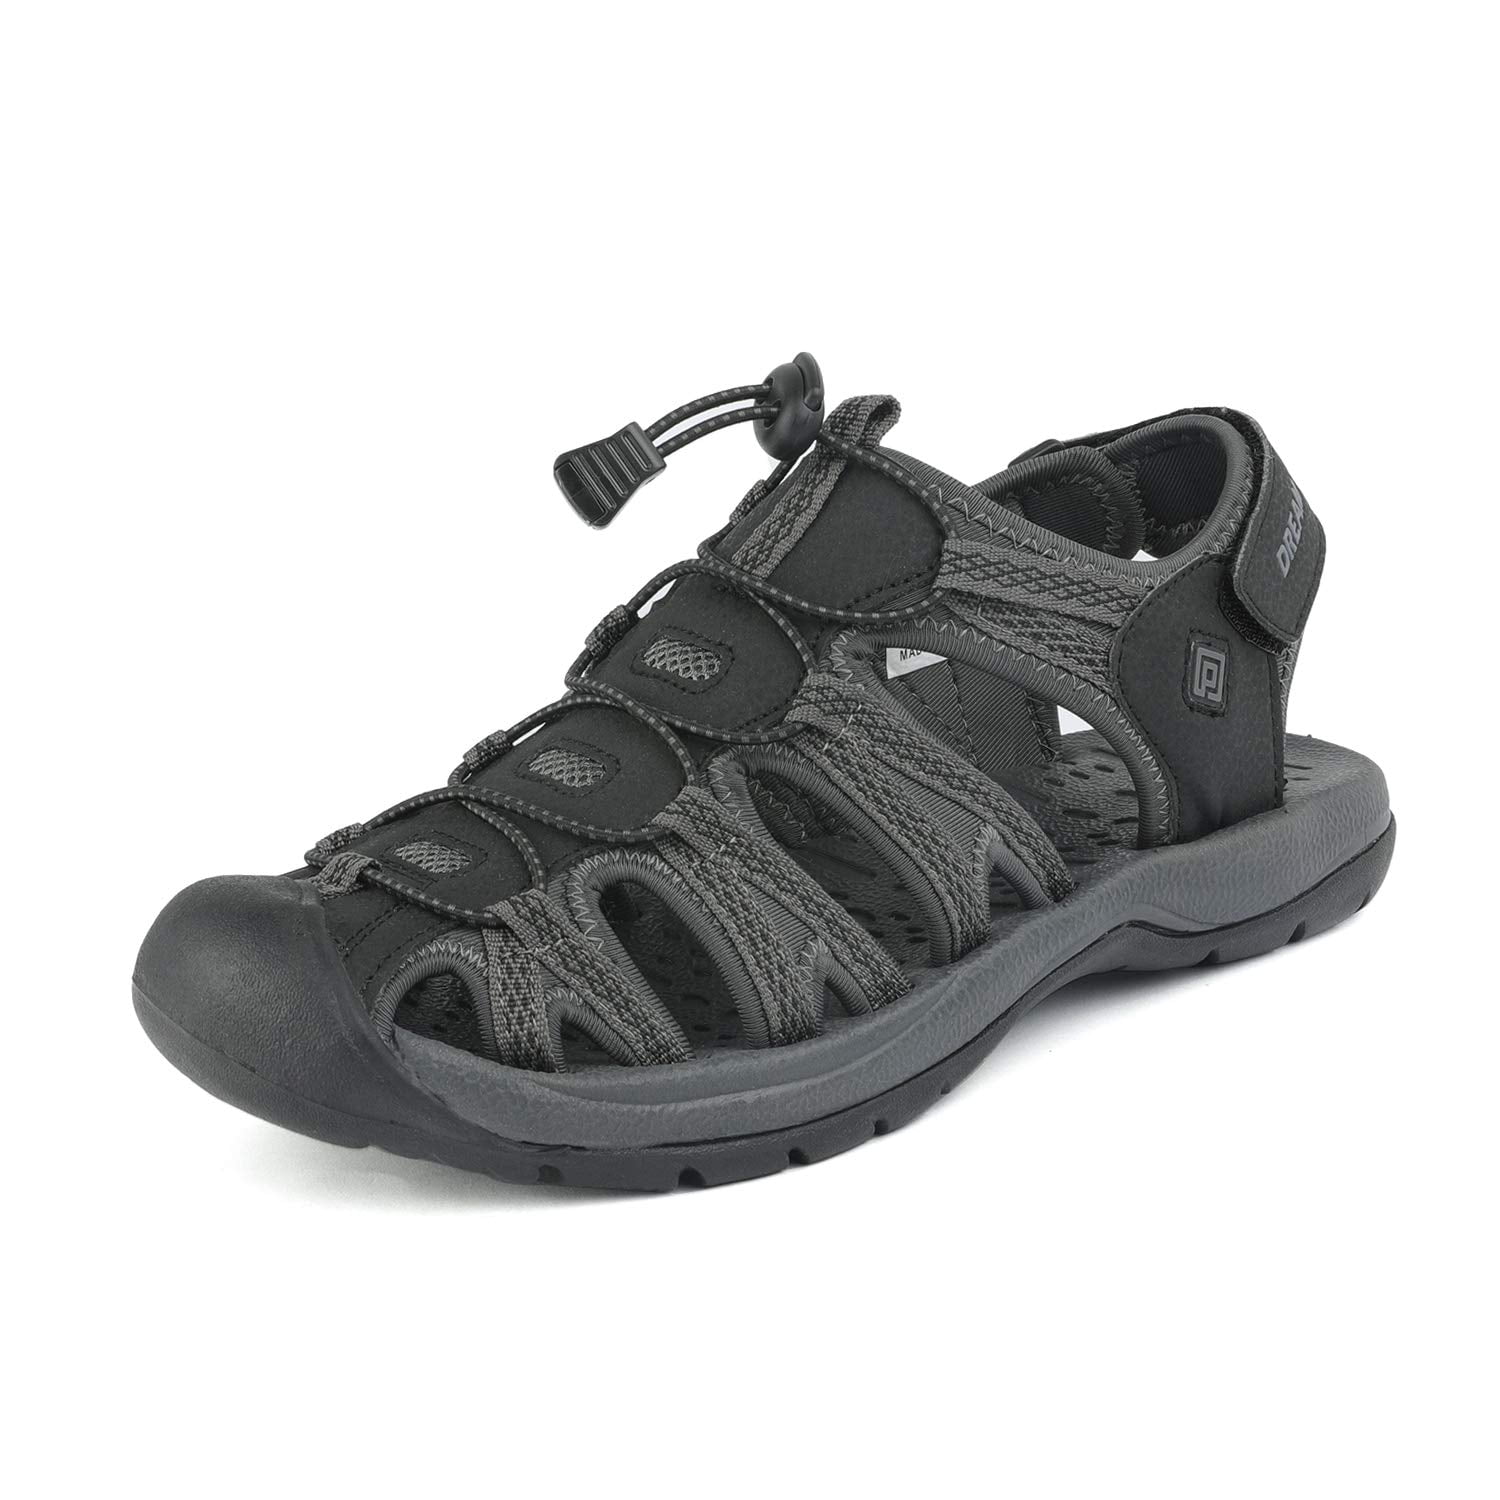 Men Summer Sport Casual Slippers Beach Flip Flops Slippers Sandals Size 12 Black 